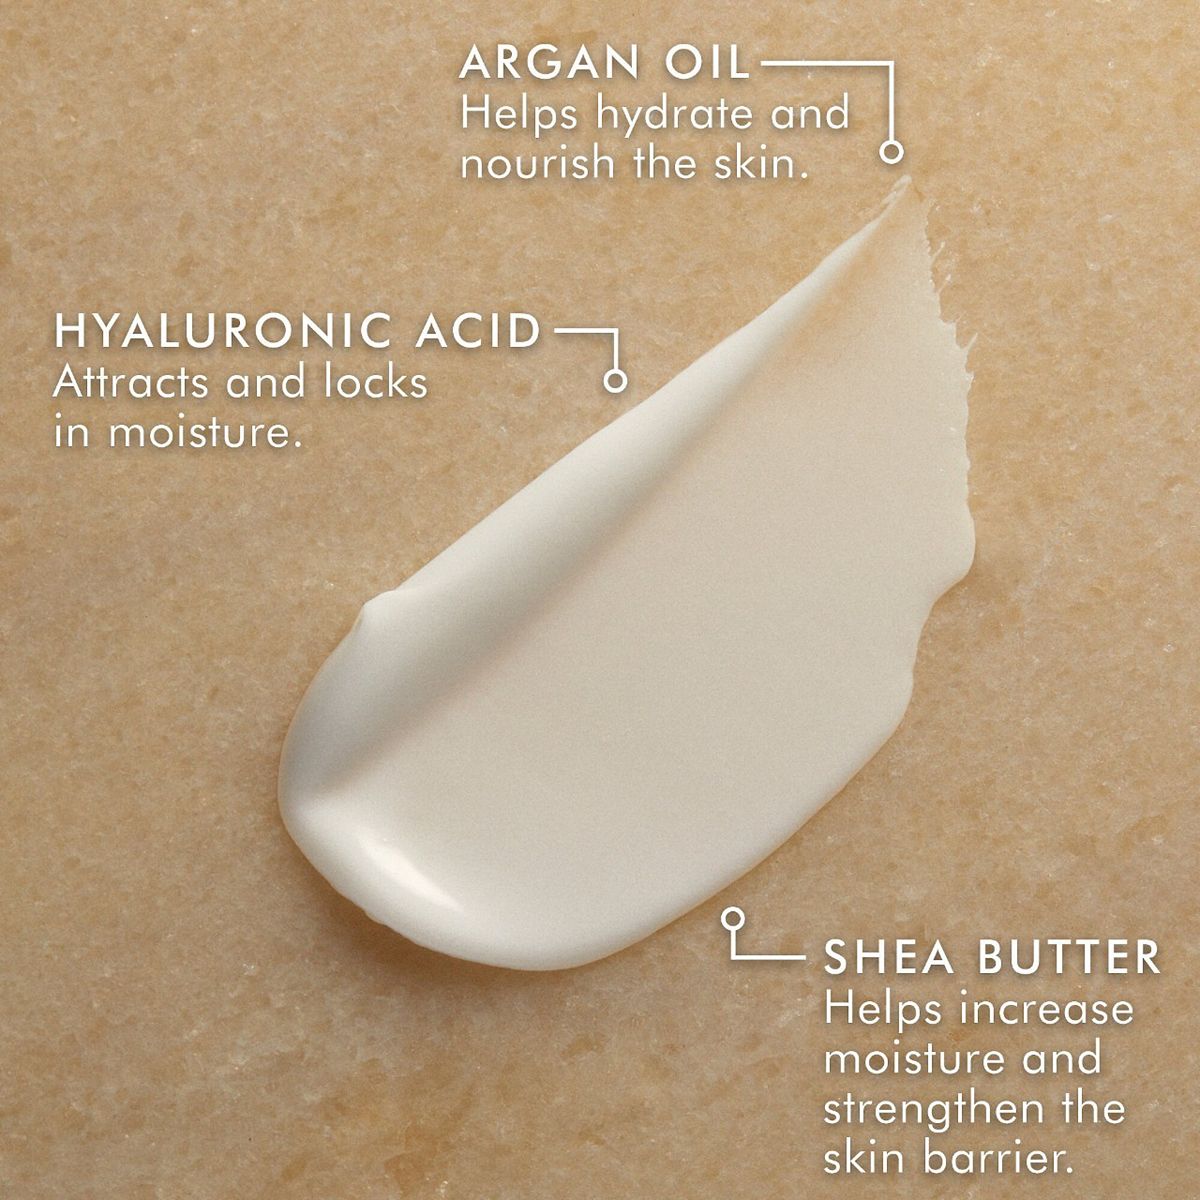 Hand Cream | Moroccanoil